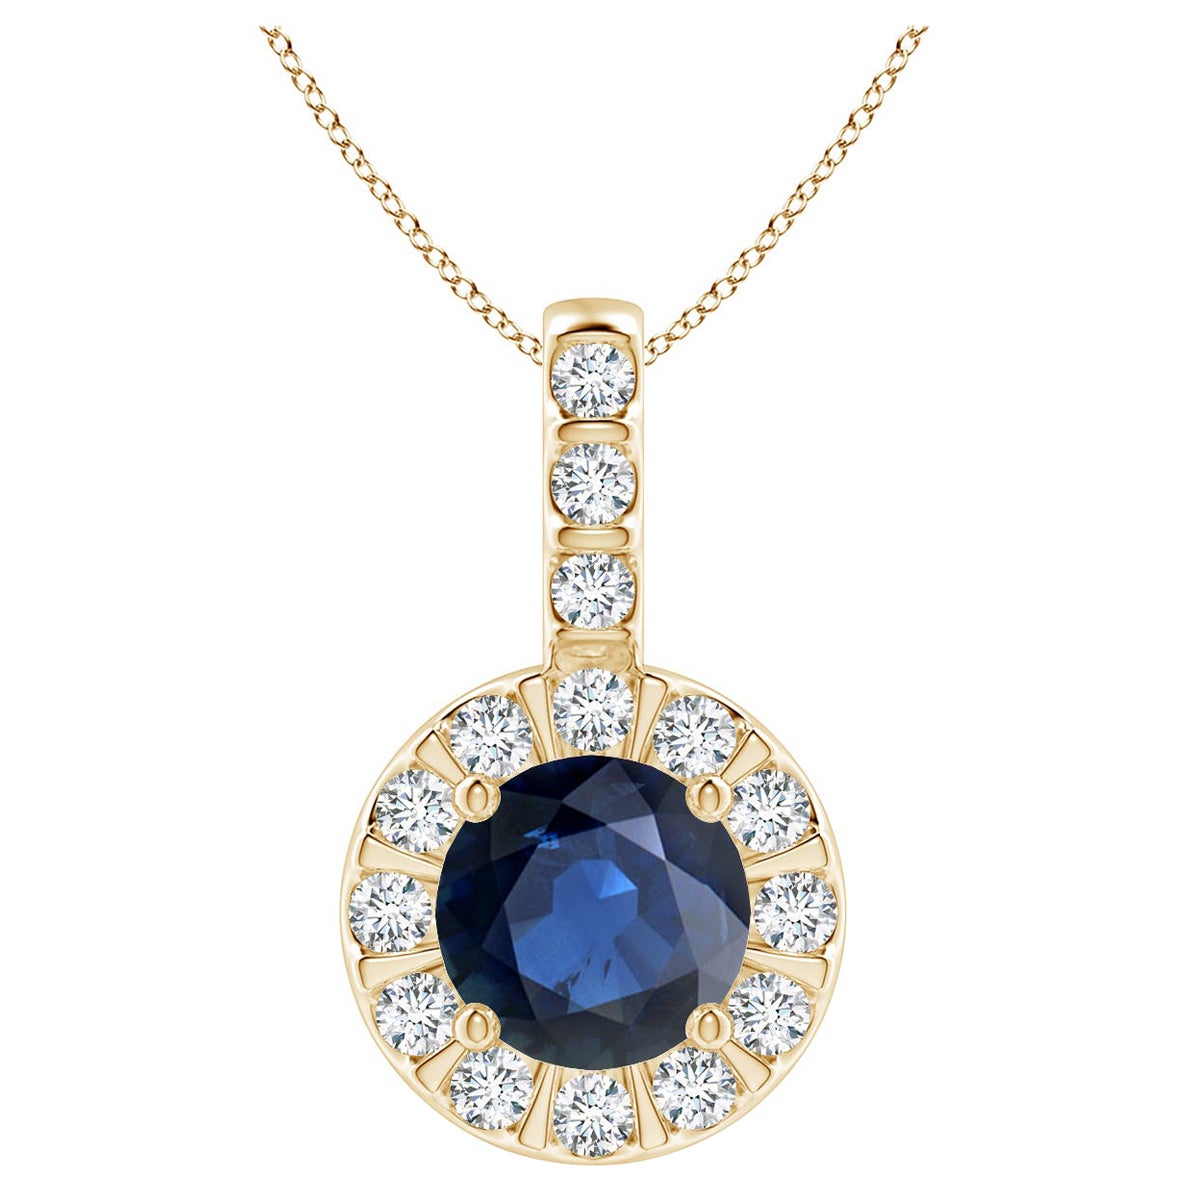 ANGARA Pendentif en or jaune 14 carats avec saphir bleu naturel de 1 carat et halo de diamants